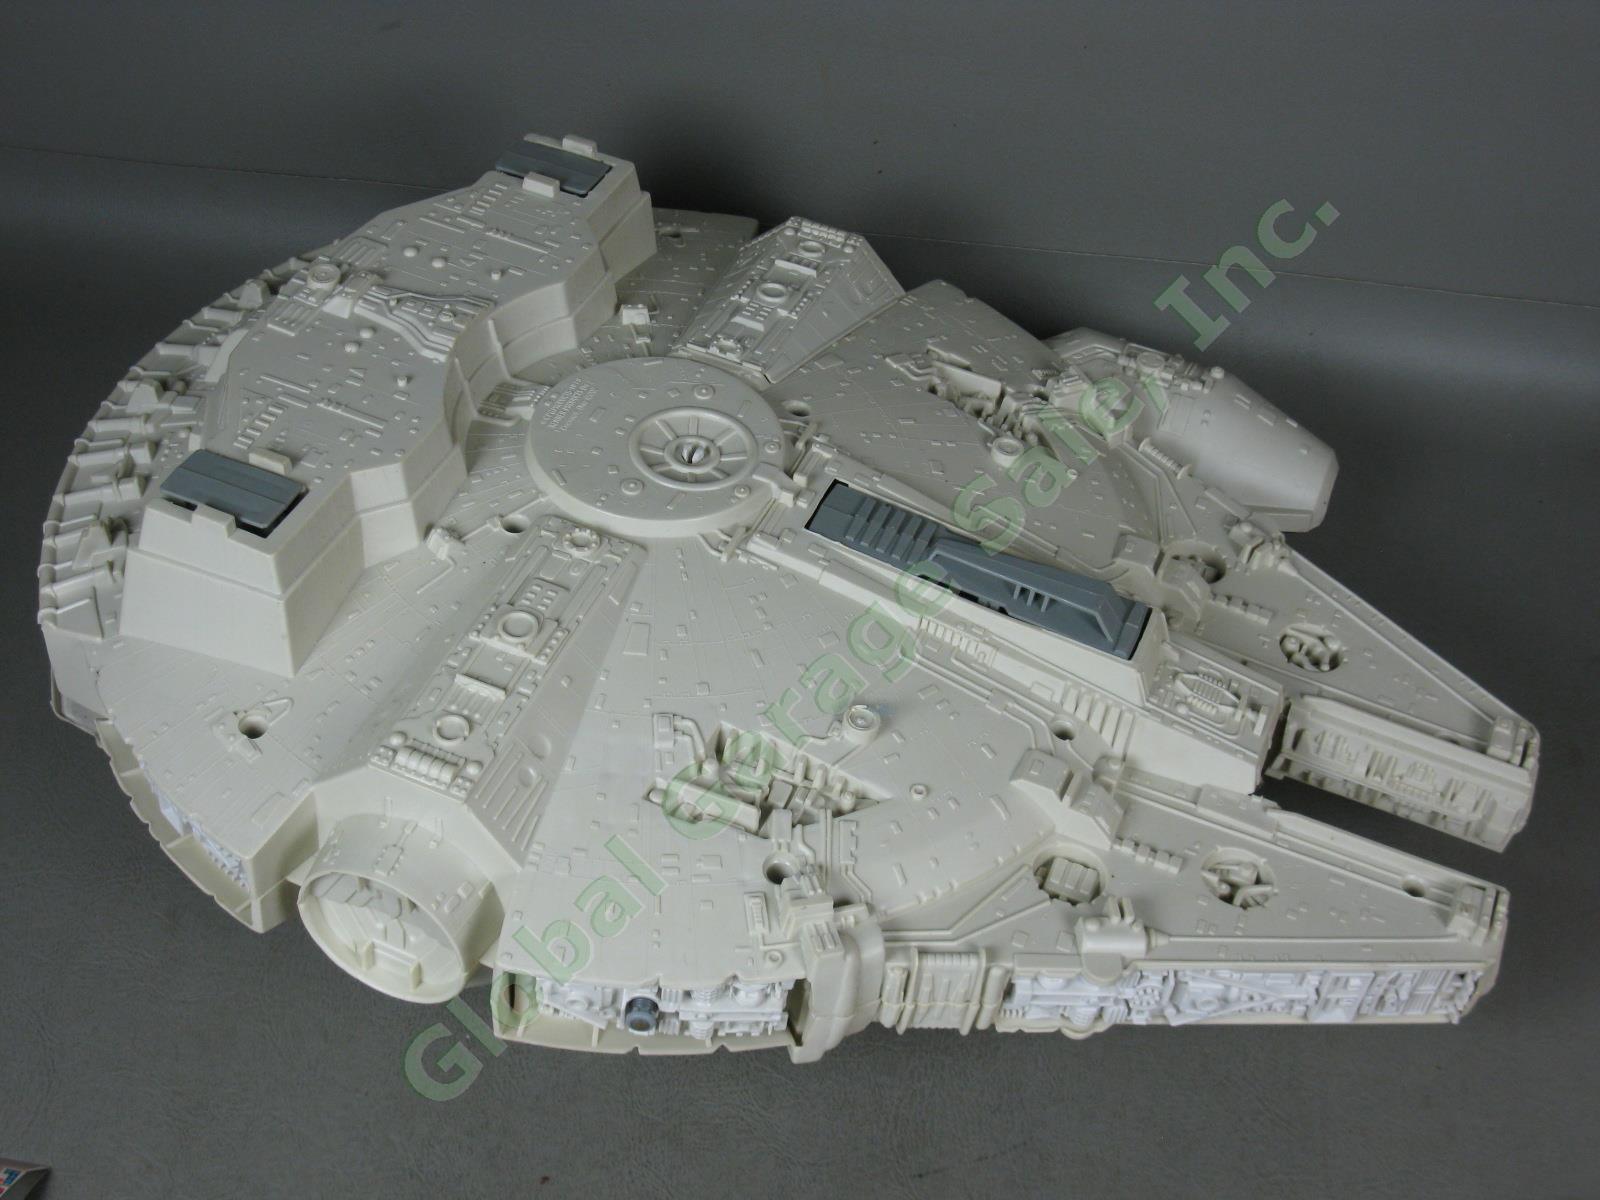 Vtg 1979 Kenner Star Wars Millennium Falcon Vehicle w/Box Labels Instructions NR 4